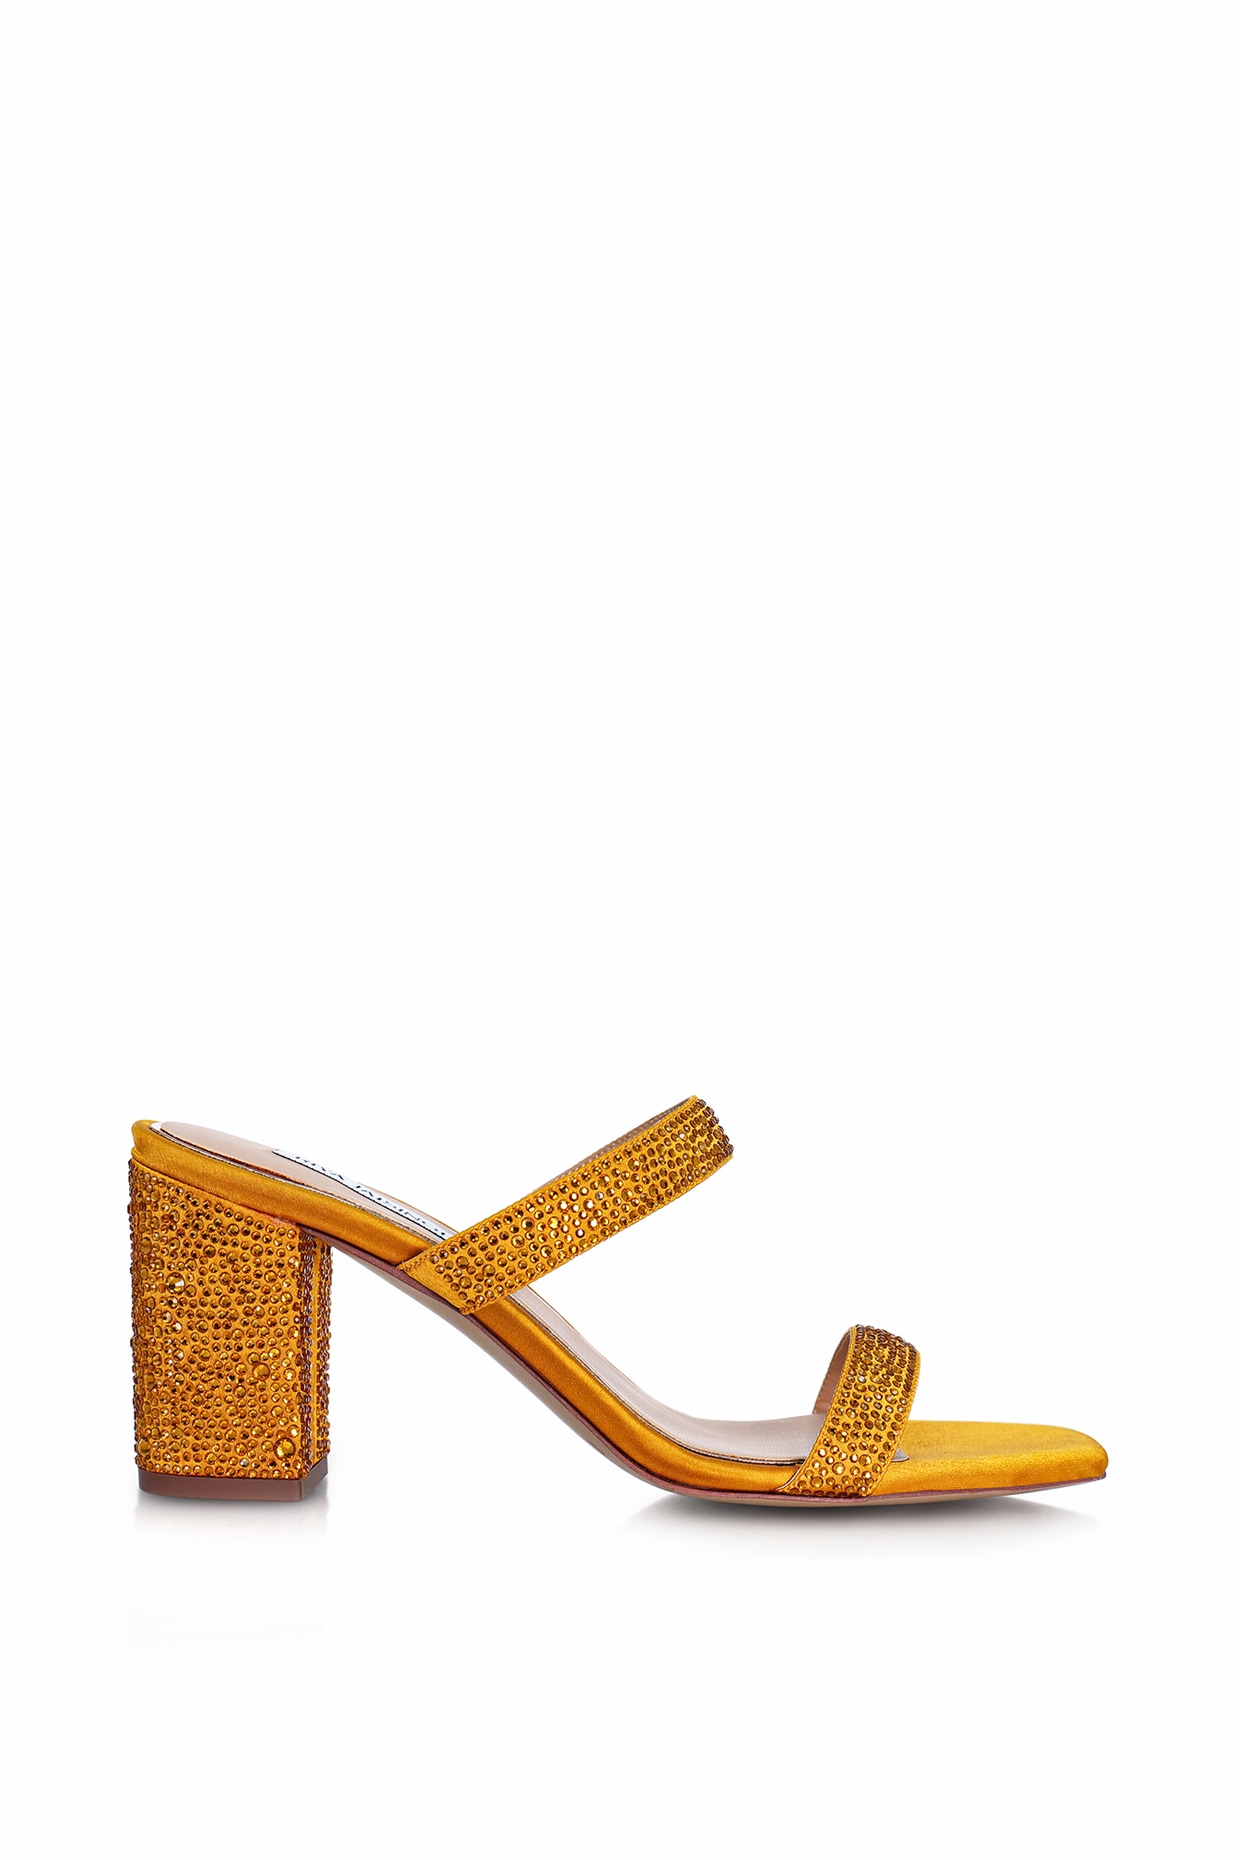 Madeline Girl Novelette Caged Yellow Sandals sz 8.5 M Faux Suede/Block Heel  ~NEW | eBay